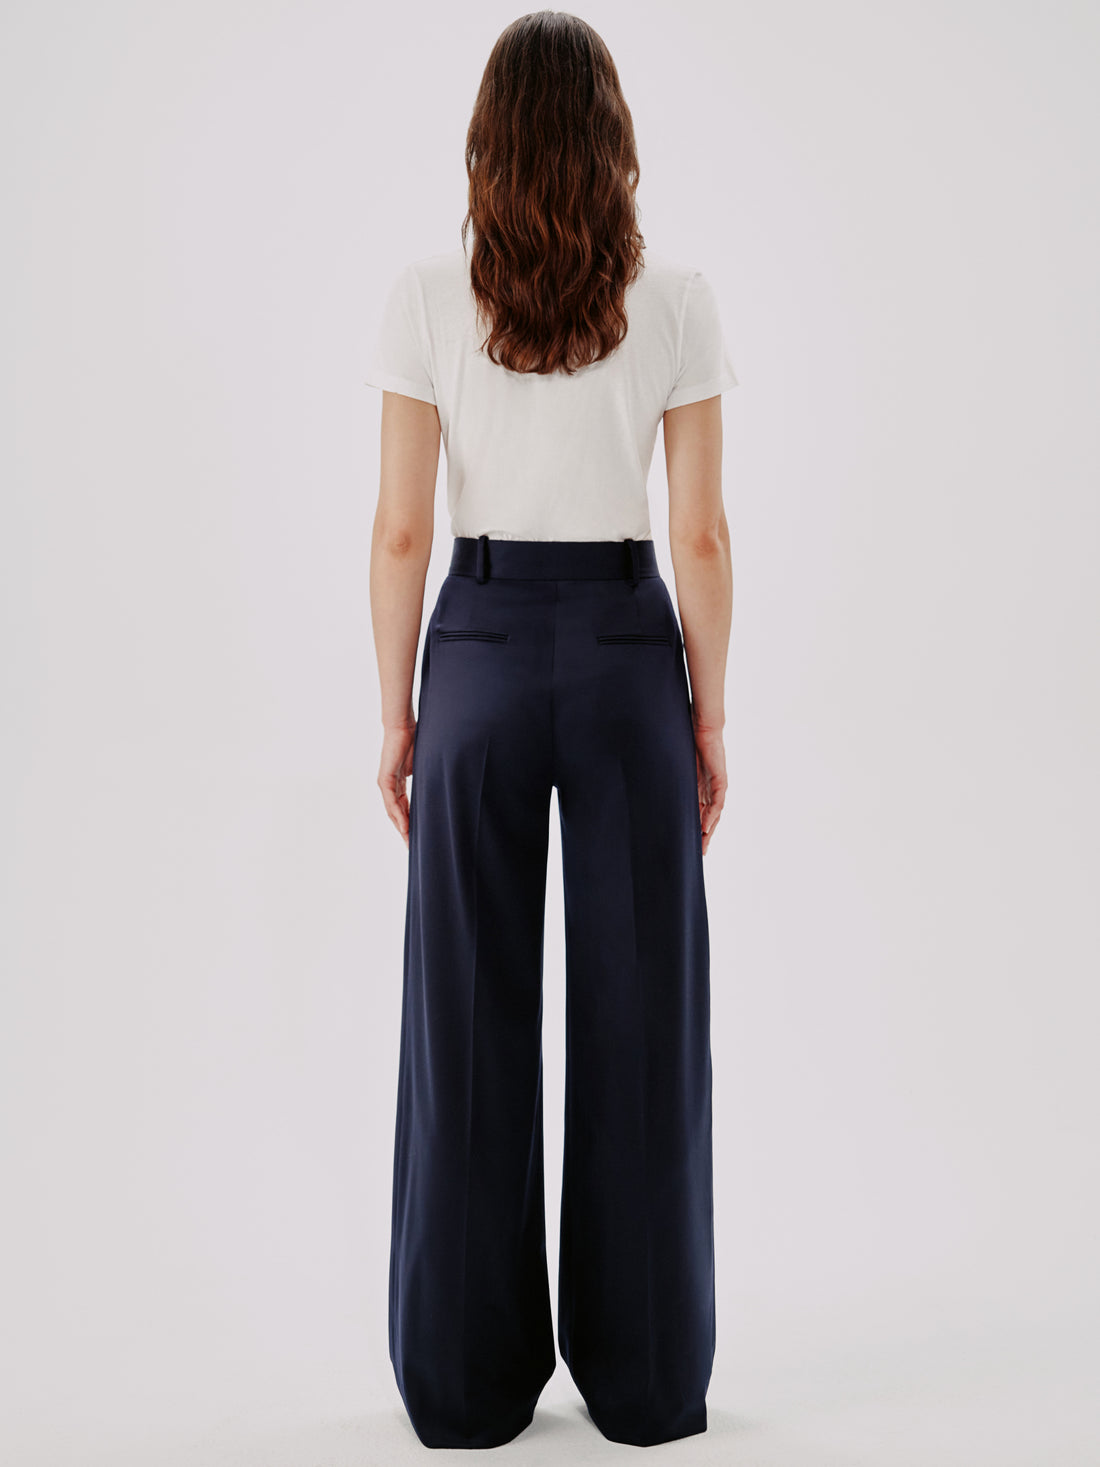 Loopsun Women's Pants, Women's Flare Solid Suit Pants Leisure Trousers  Bell-bottoms Solid Color Pants